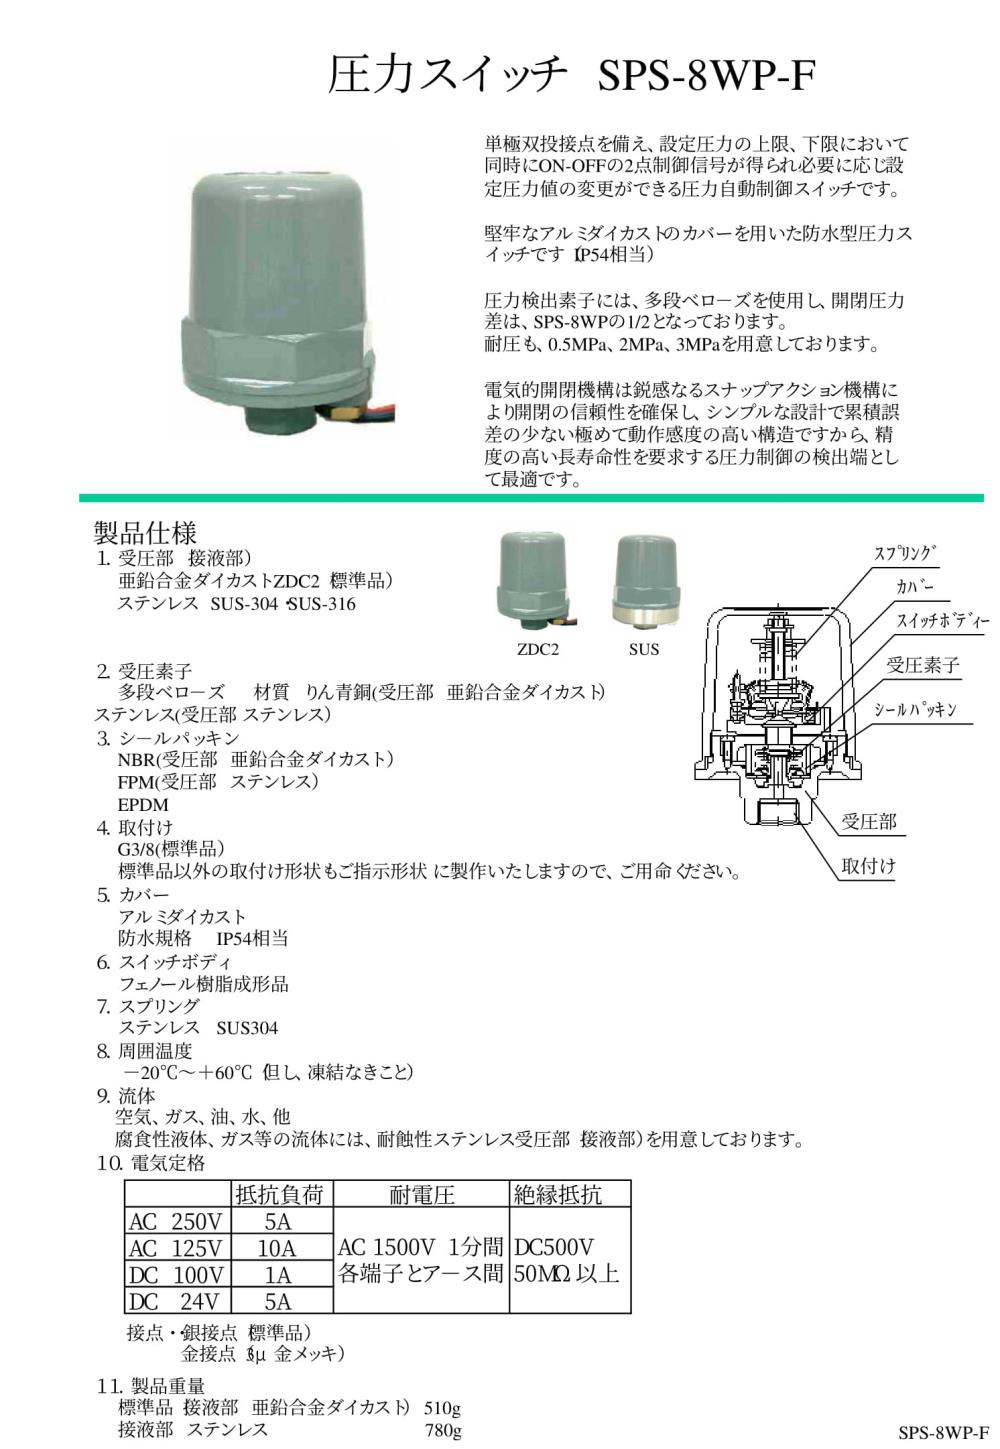 SANWA DENKI Pressure Switch SPS-8WP-F, ZDC2 Series